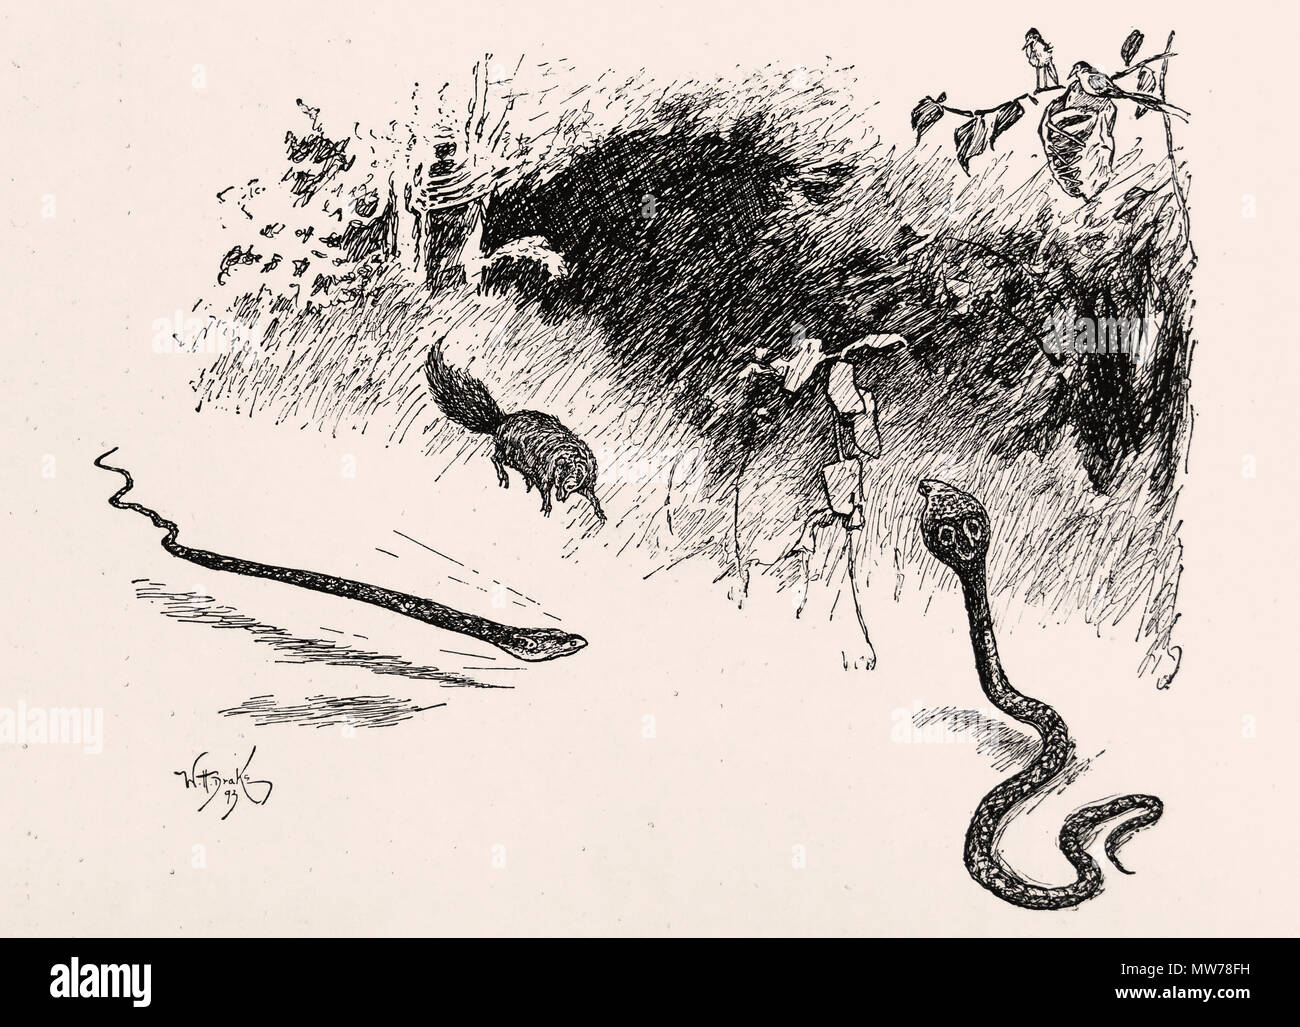 Рисунок к сказке Рикки Тикки Тави карандашом